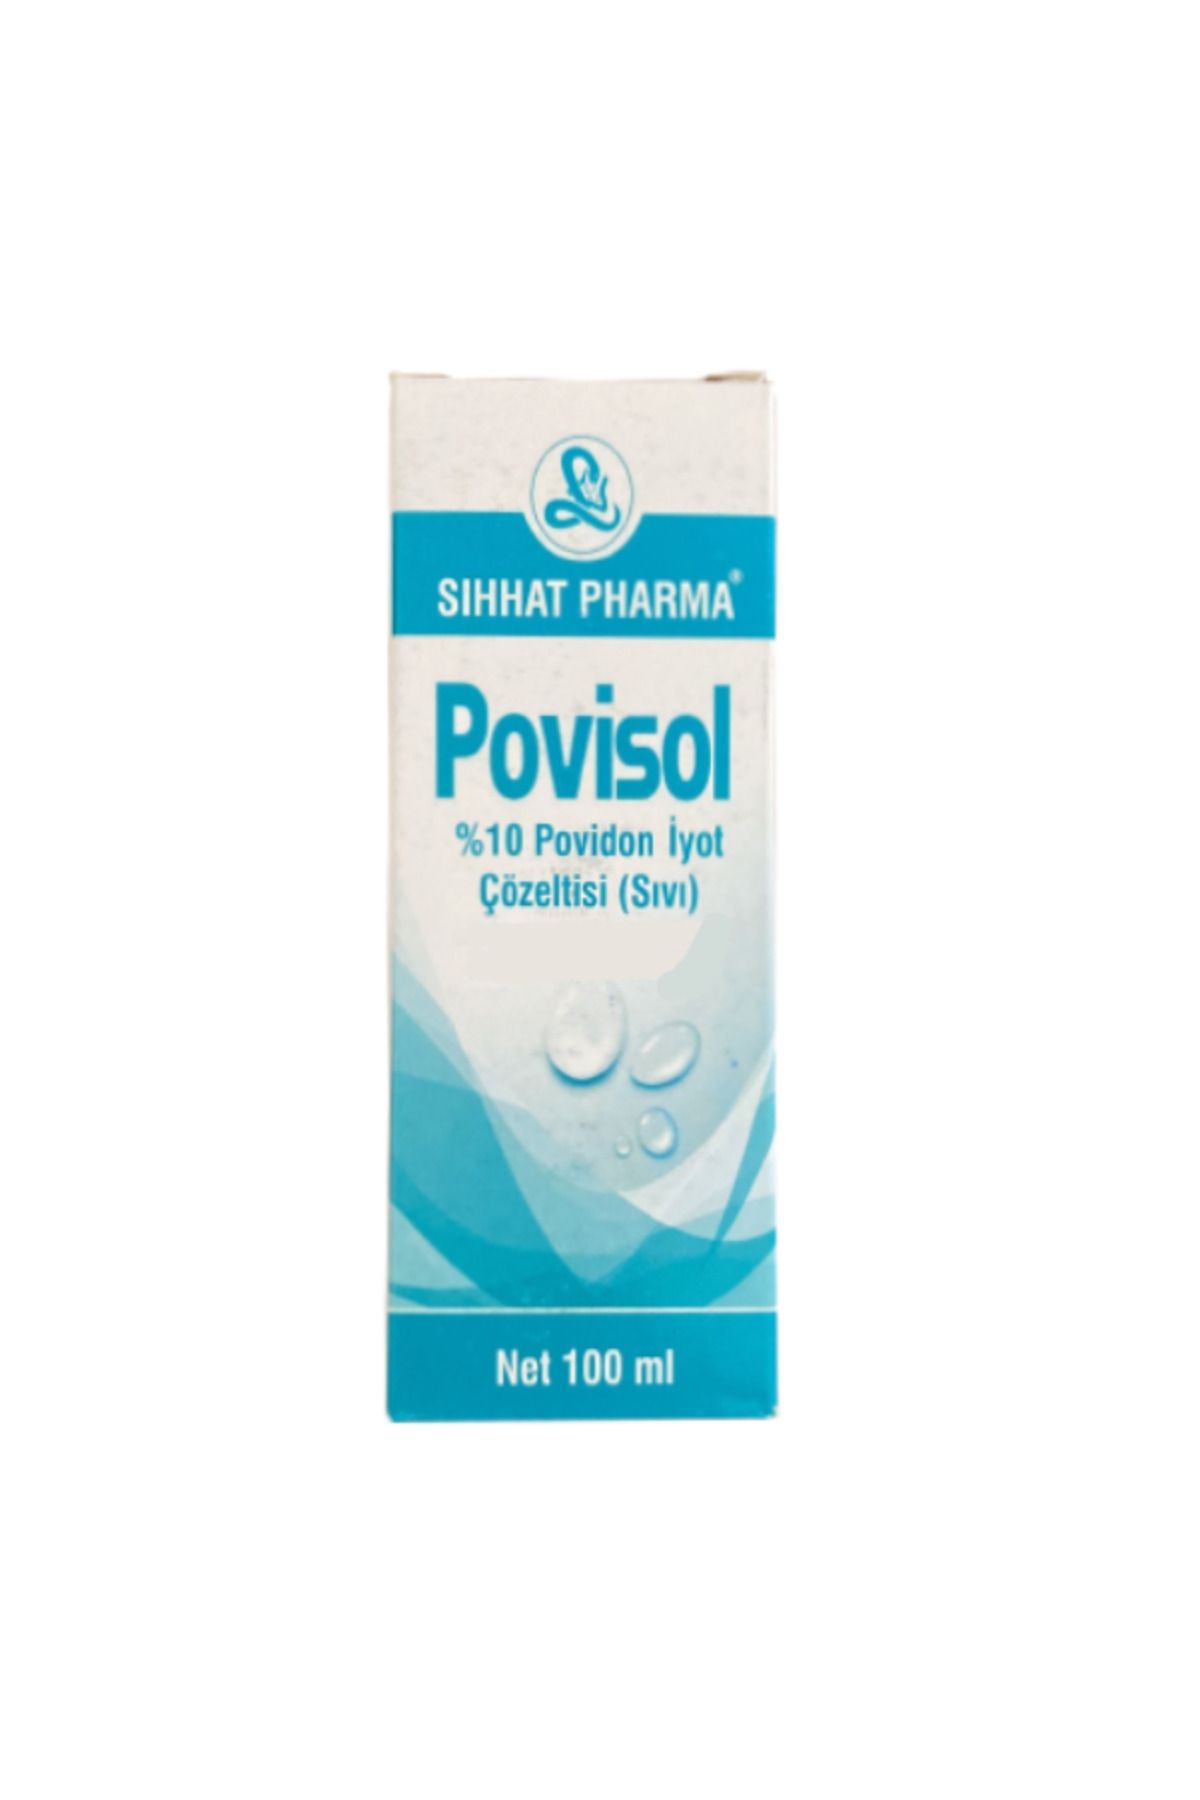 Sıhhat Pharma Povisol %10 Povidon Iyot Çözeltisi (sıvı) 100ml